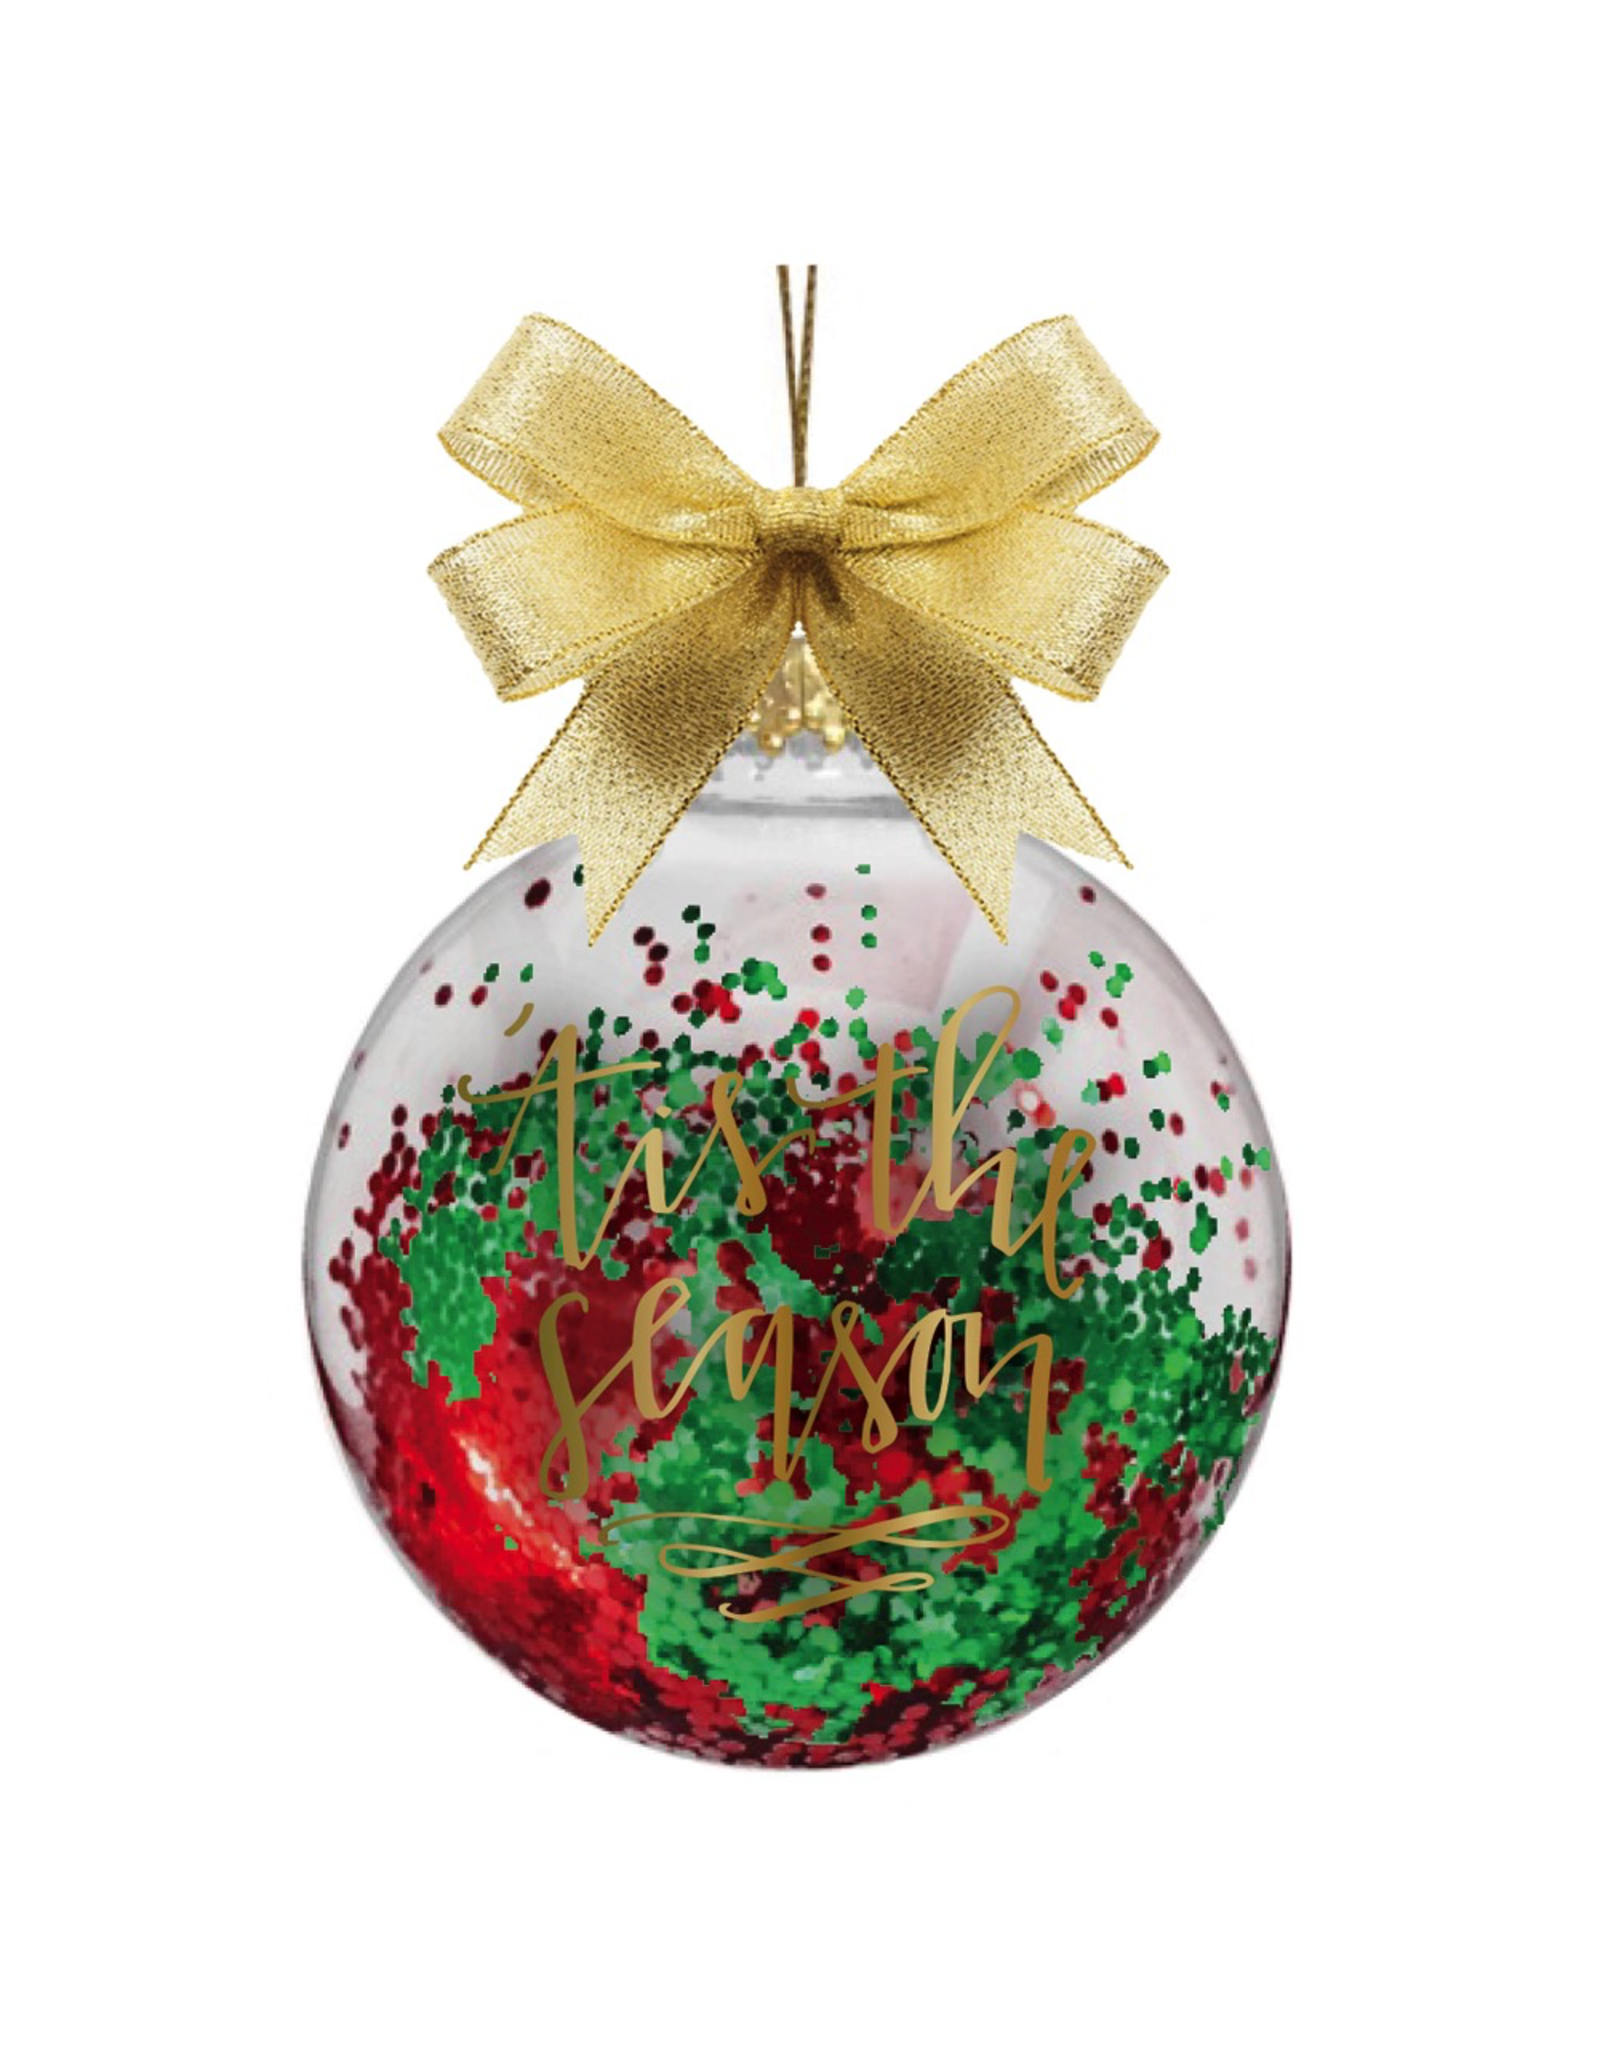 Slant Glass Ball Christmas Ornament Tis the Season